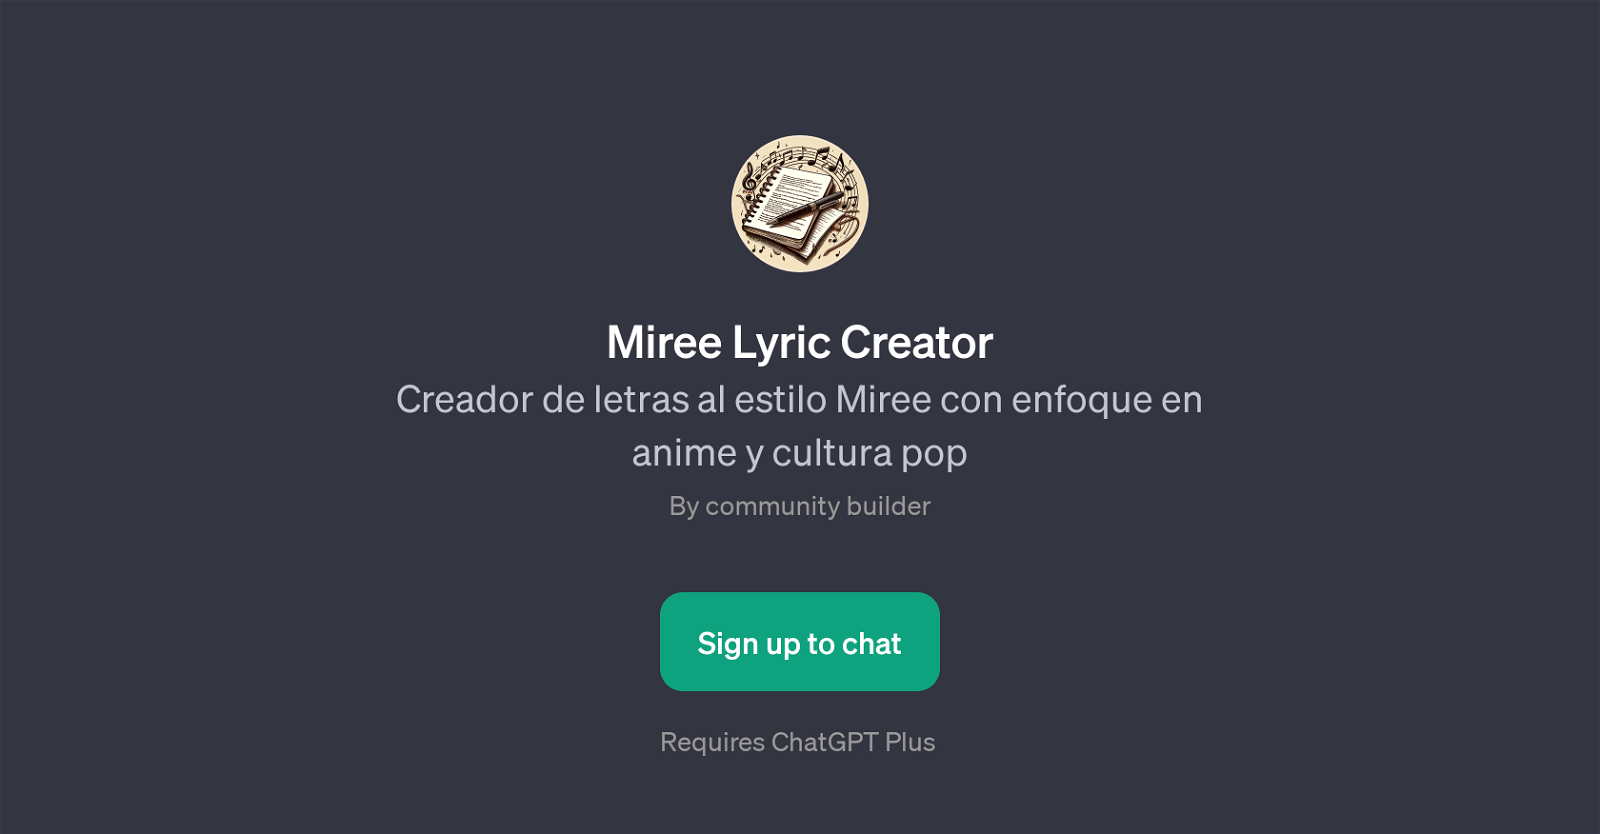 Miree Lyric Creator website